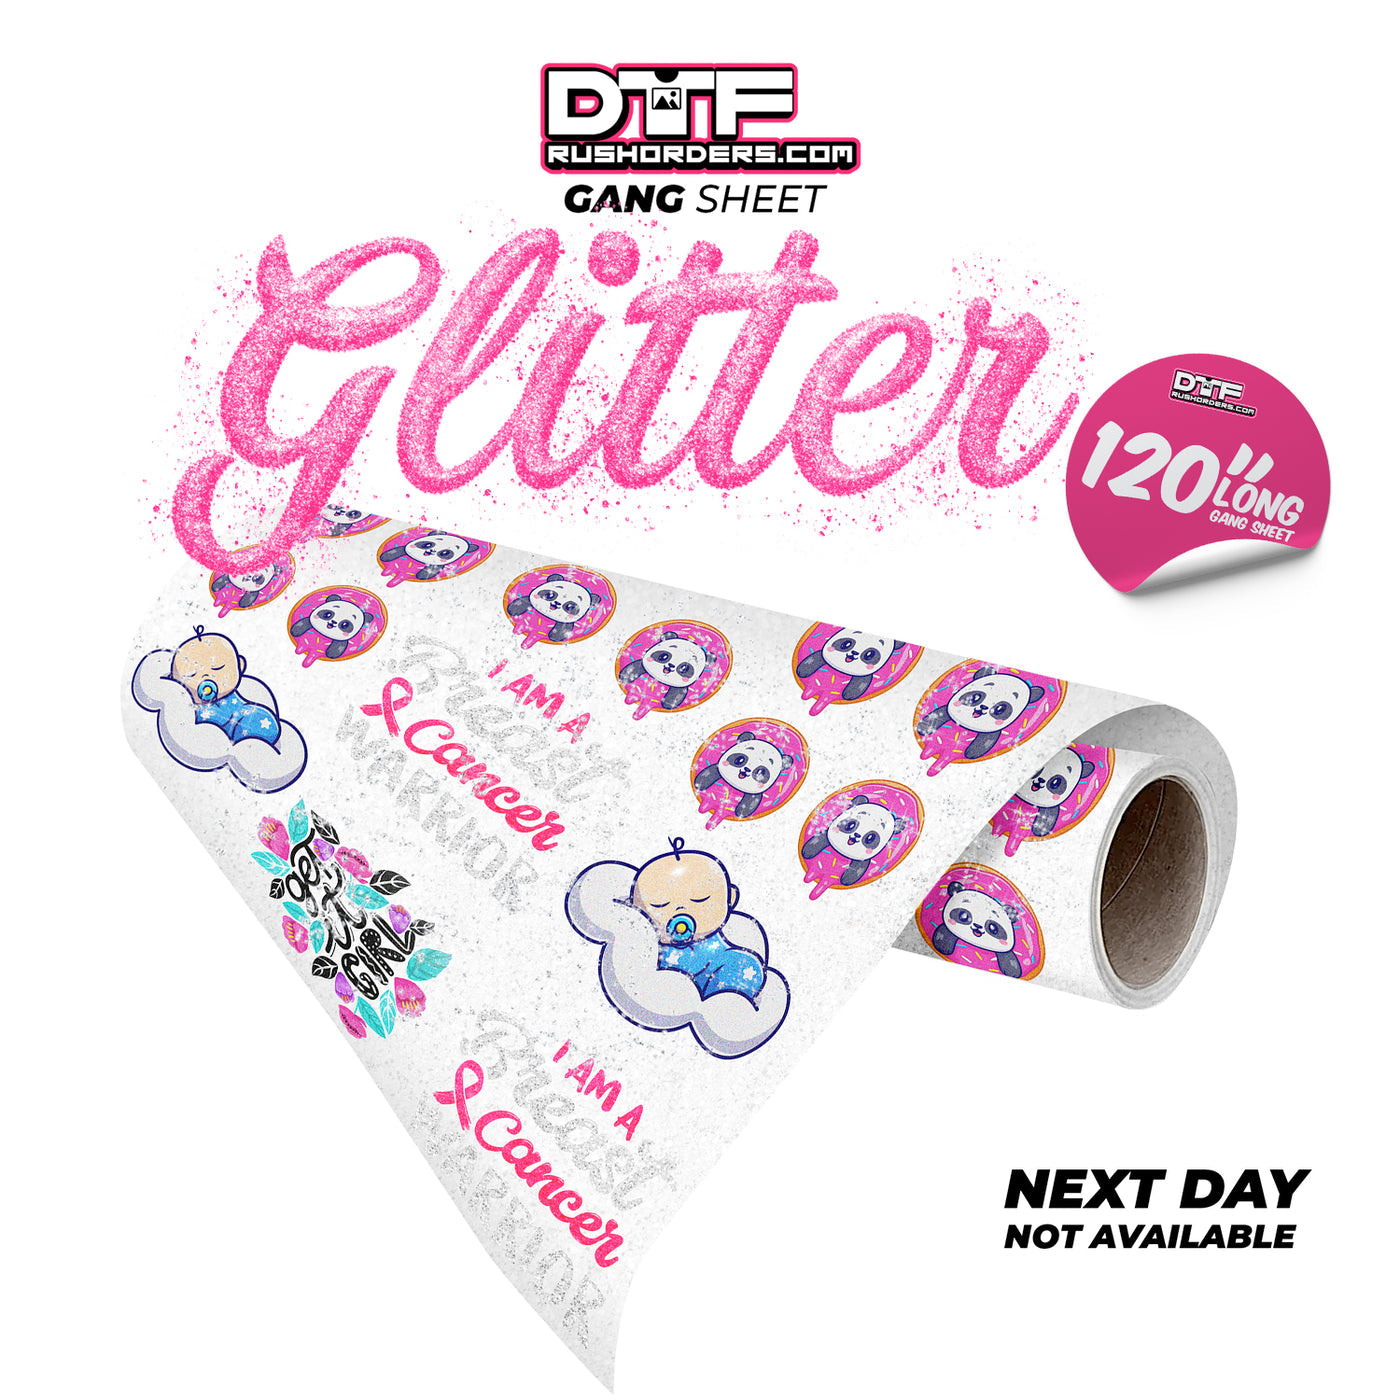 Glitter DTF Gang Sheet Builder